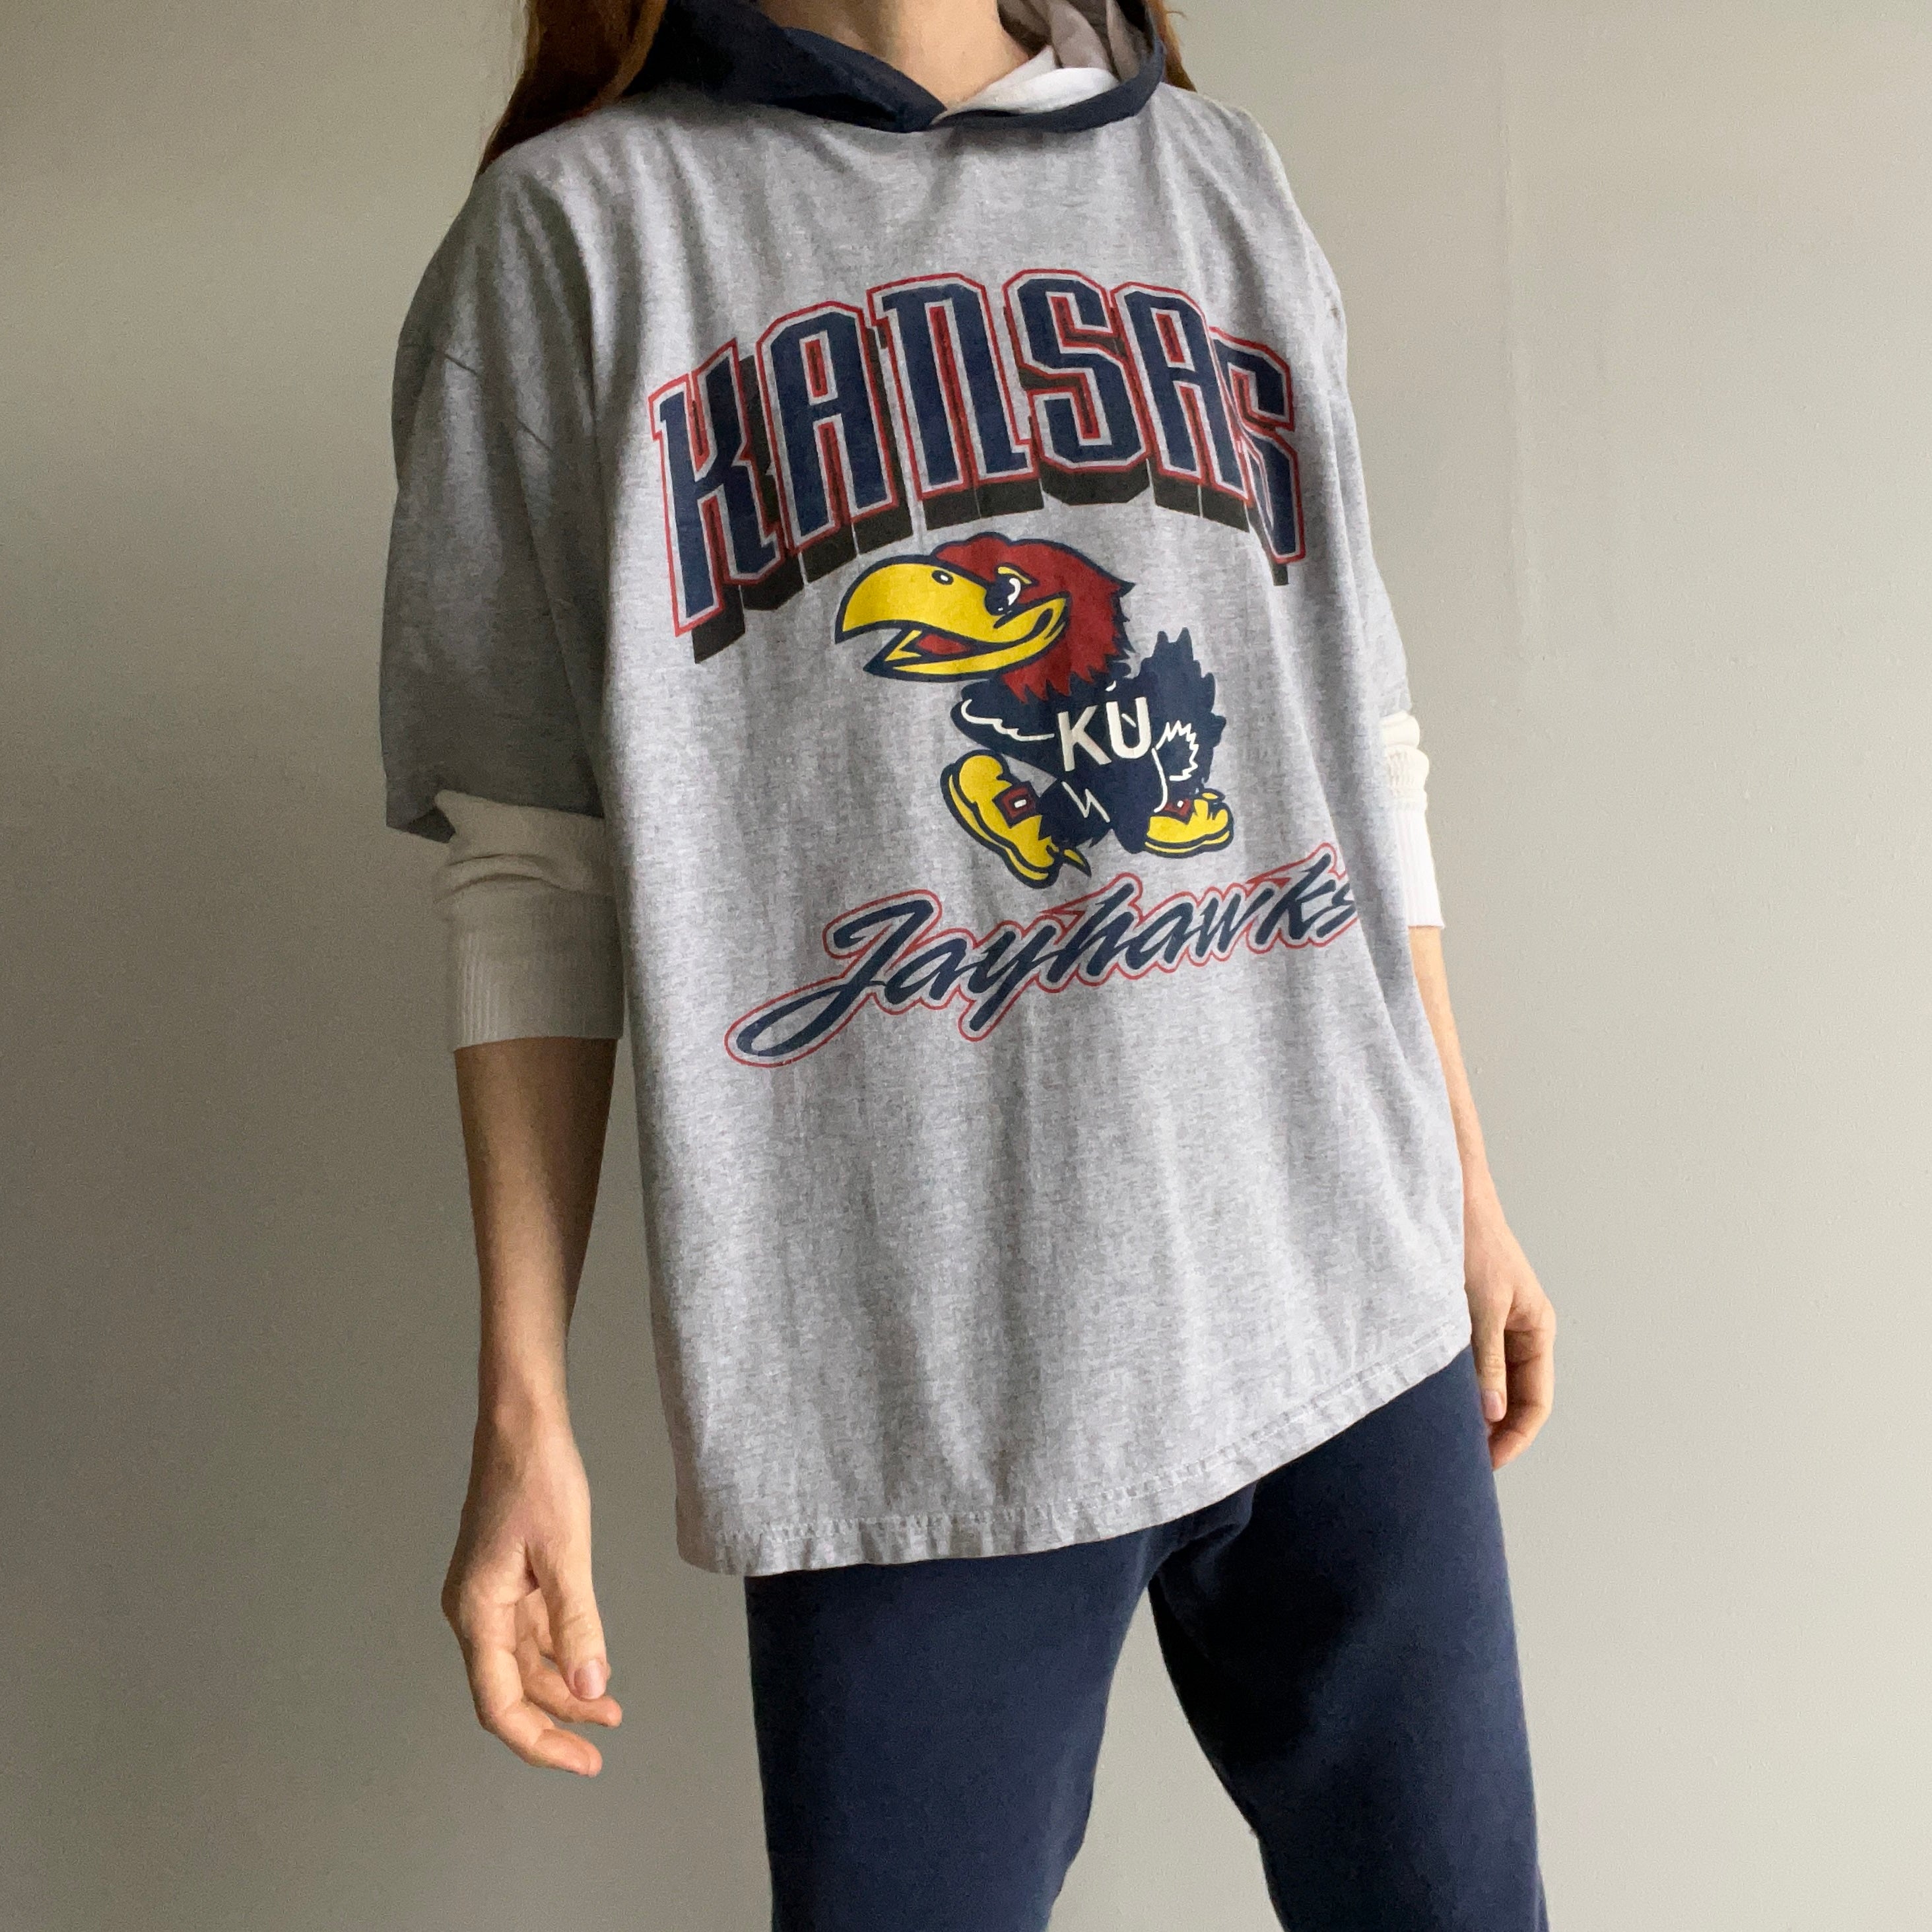 1990s Kansas University Jayhawks Oversized T-Shirt Hoodie - Oh My!